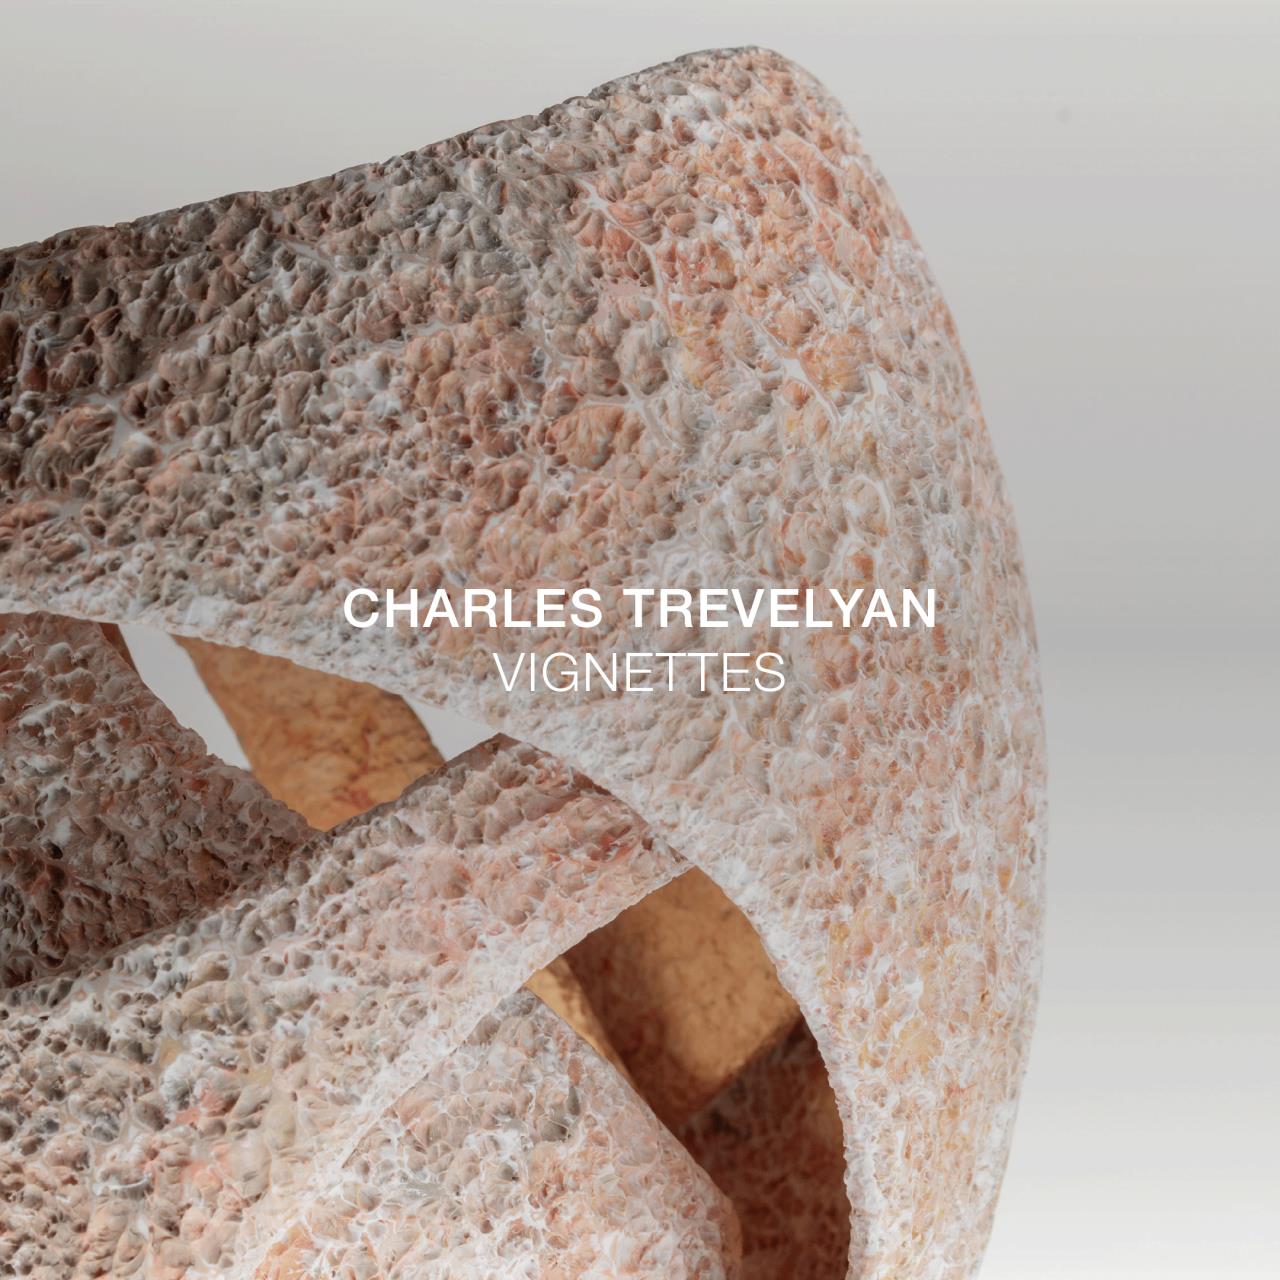 CHARLES TREVELYAN: Vignettes - Exhibition Opening Drinks